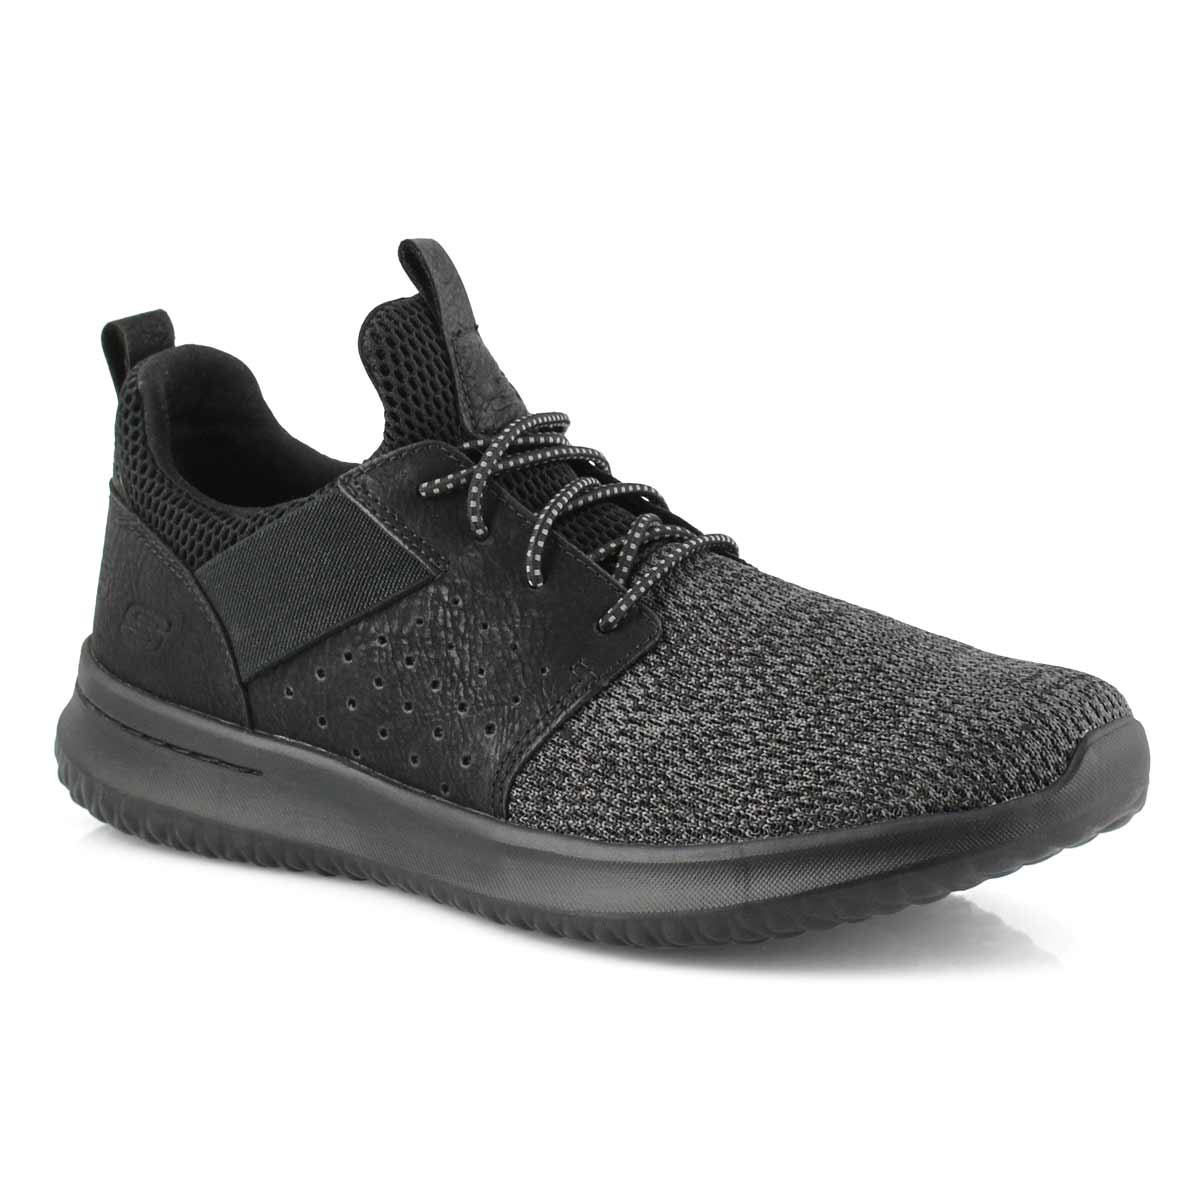 Skechers Men's Delson Camben Sneakers - Black | SoftMoc.com